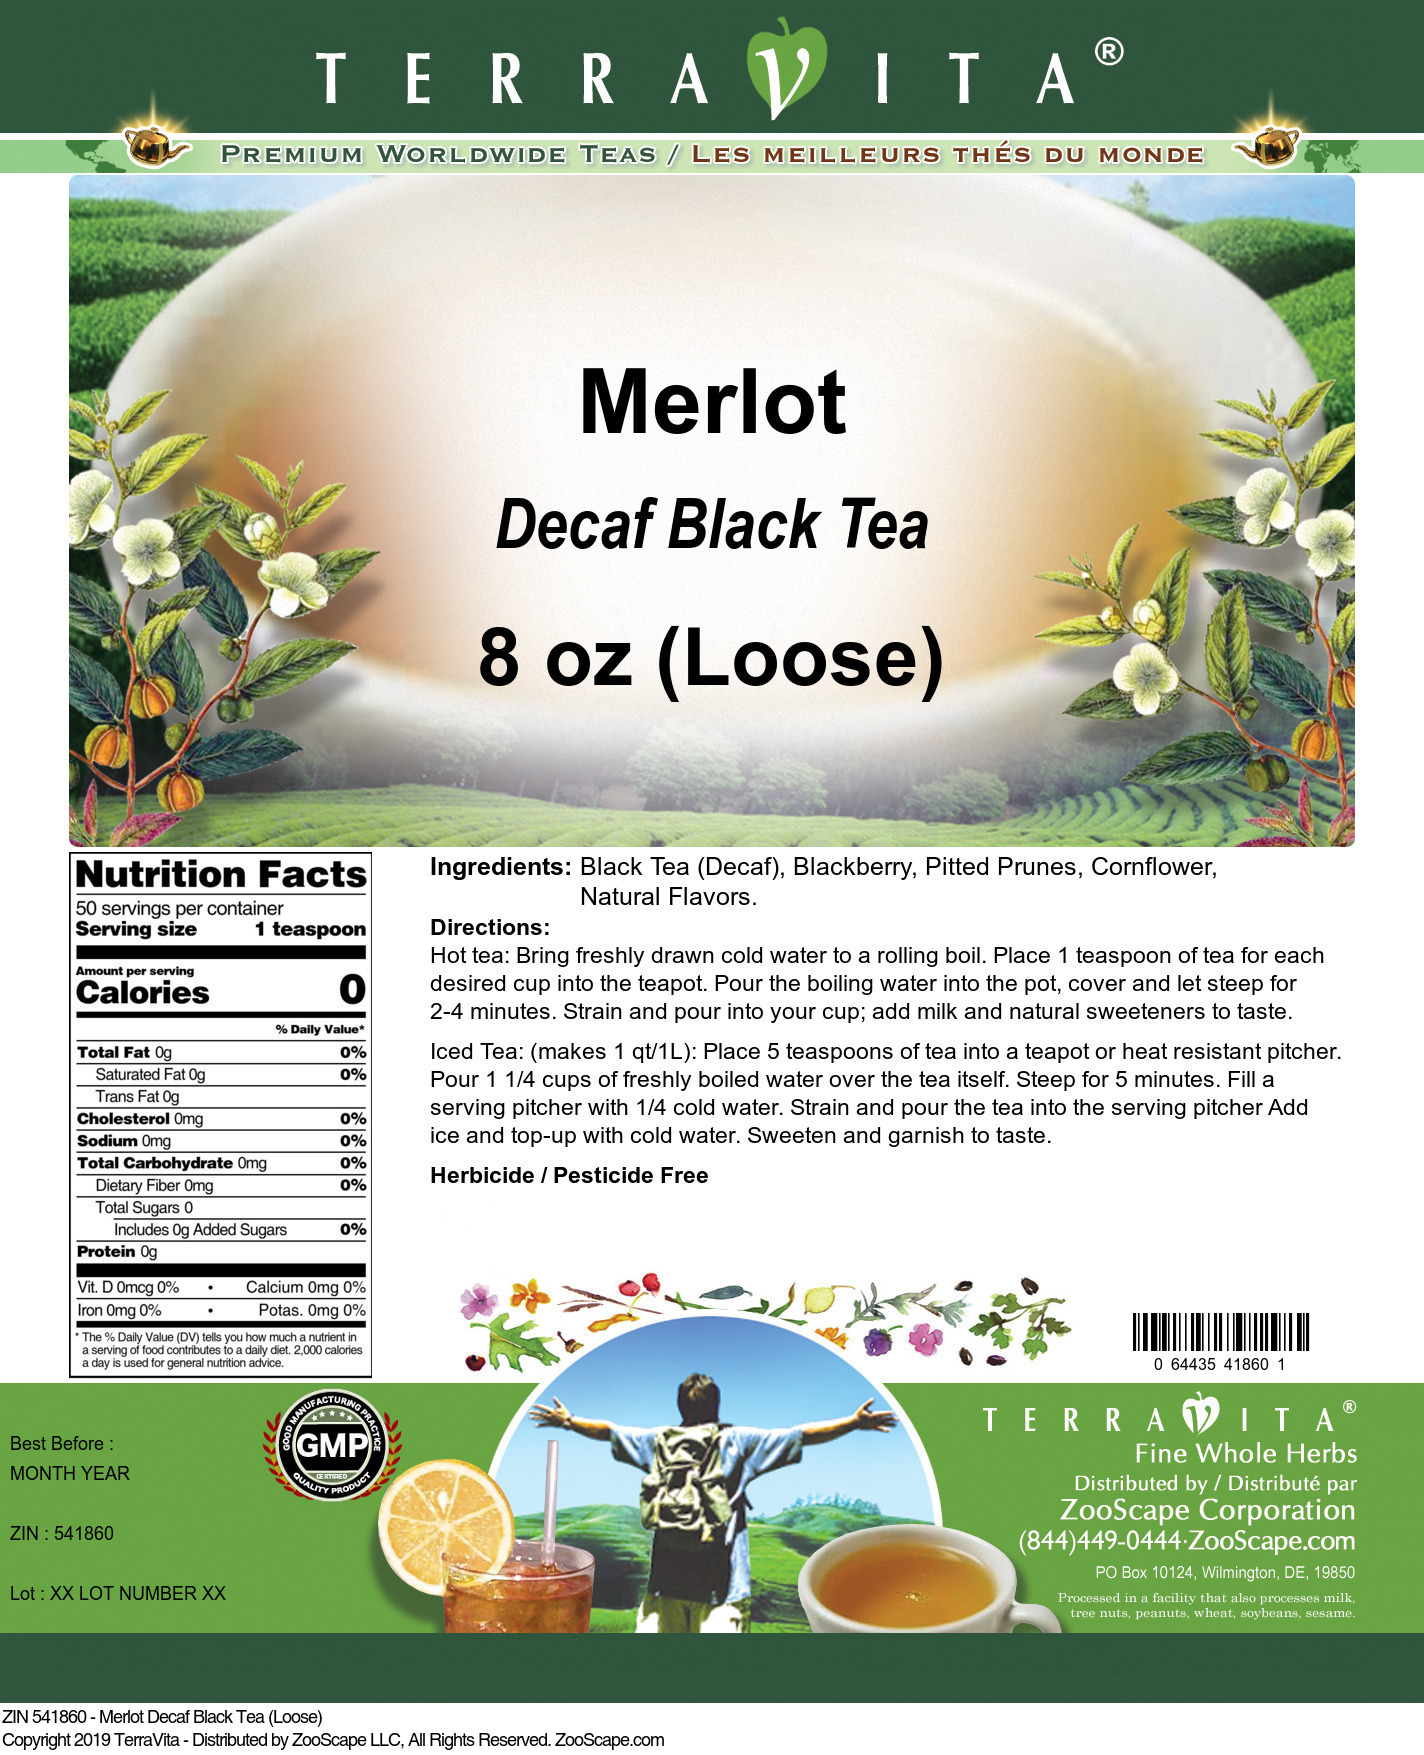 Merlot Decaf Black Tea (Loose) - Label